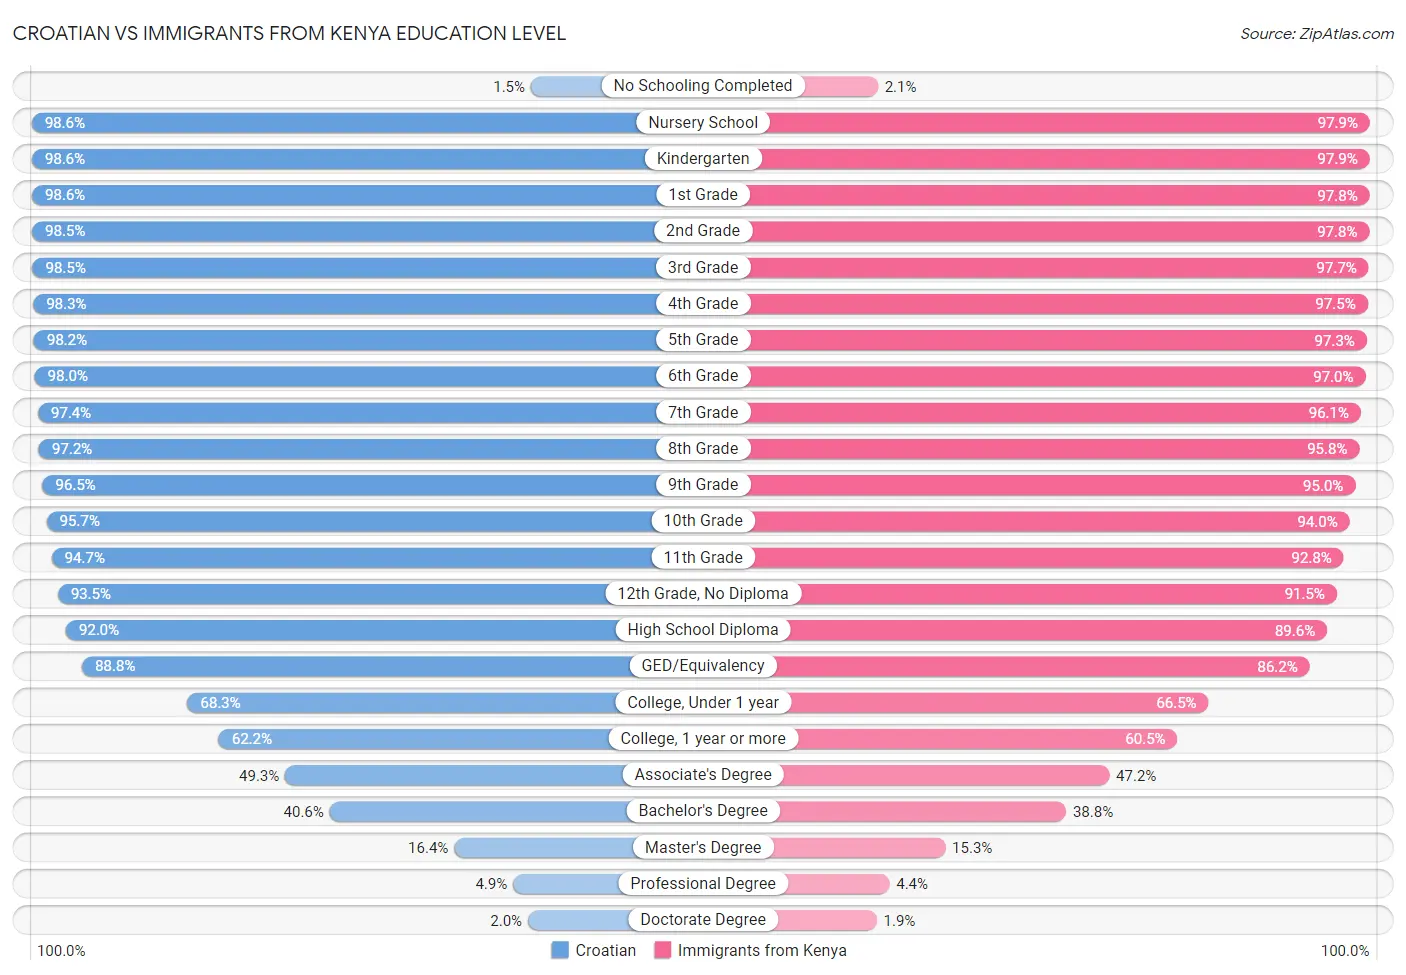 Croatian vs Immigrants from Kenya Education Level